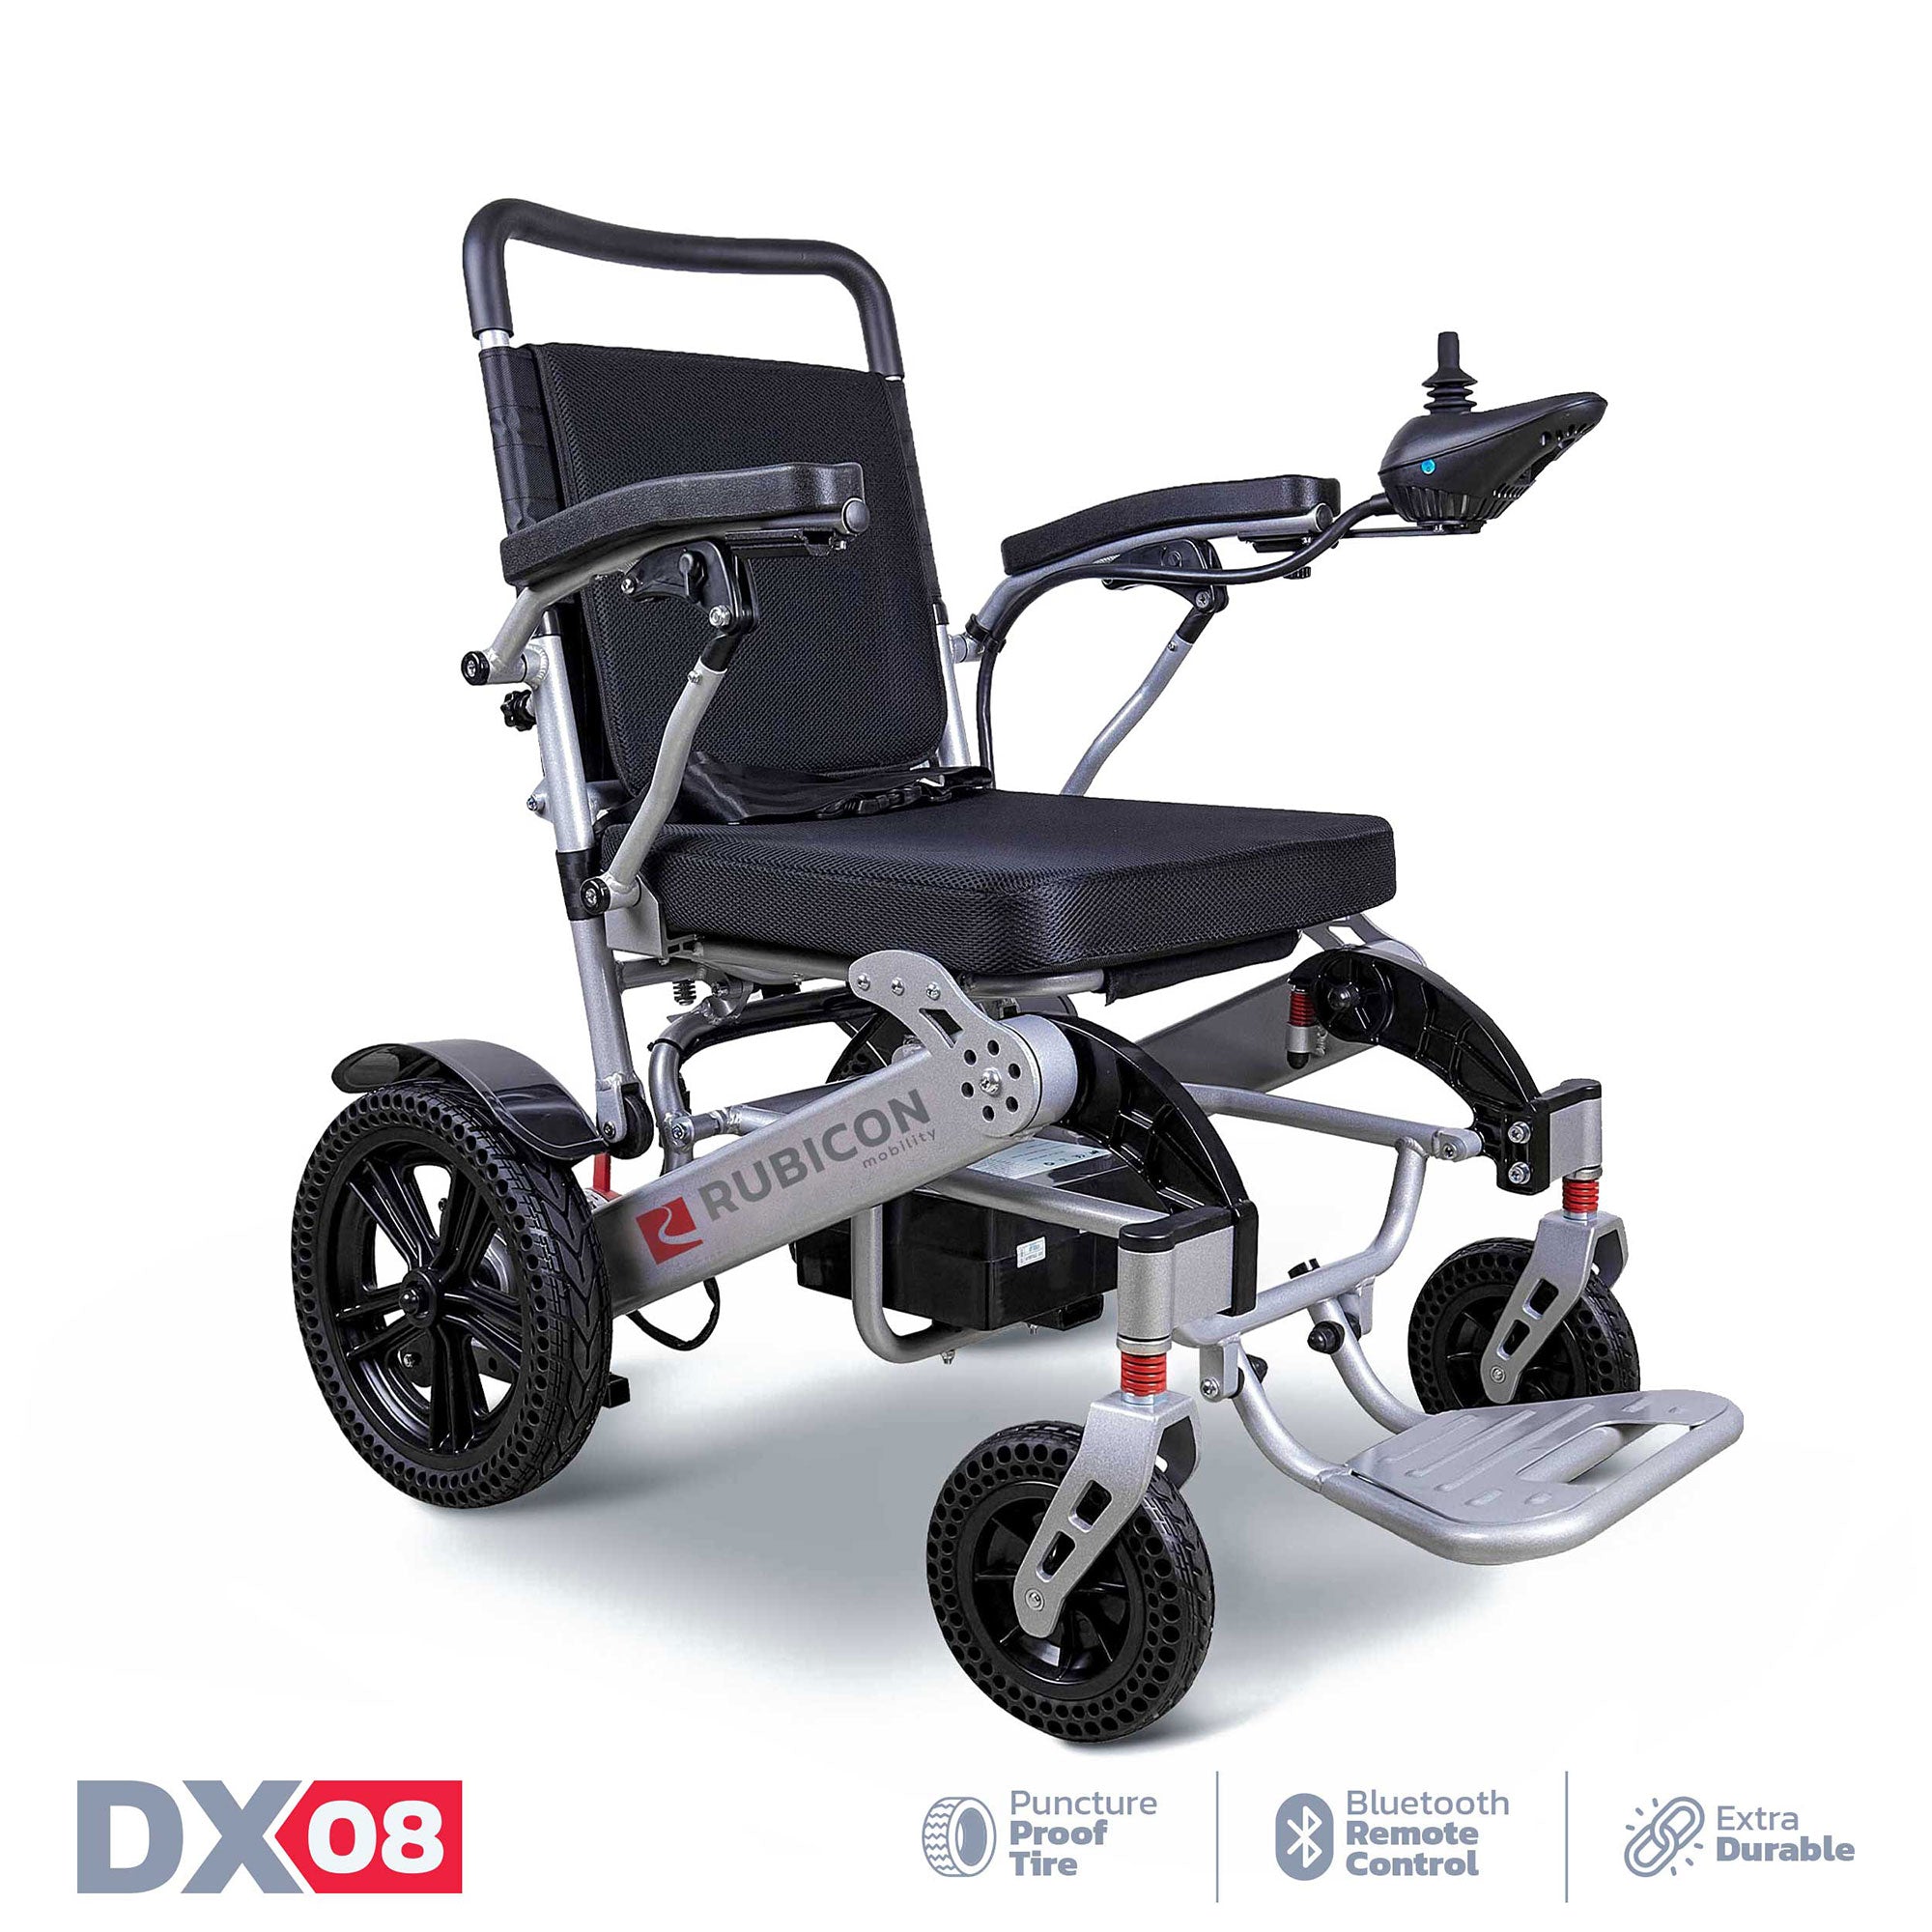 Rubicon DX08 - Extra Durable Electric Wheelchair